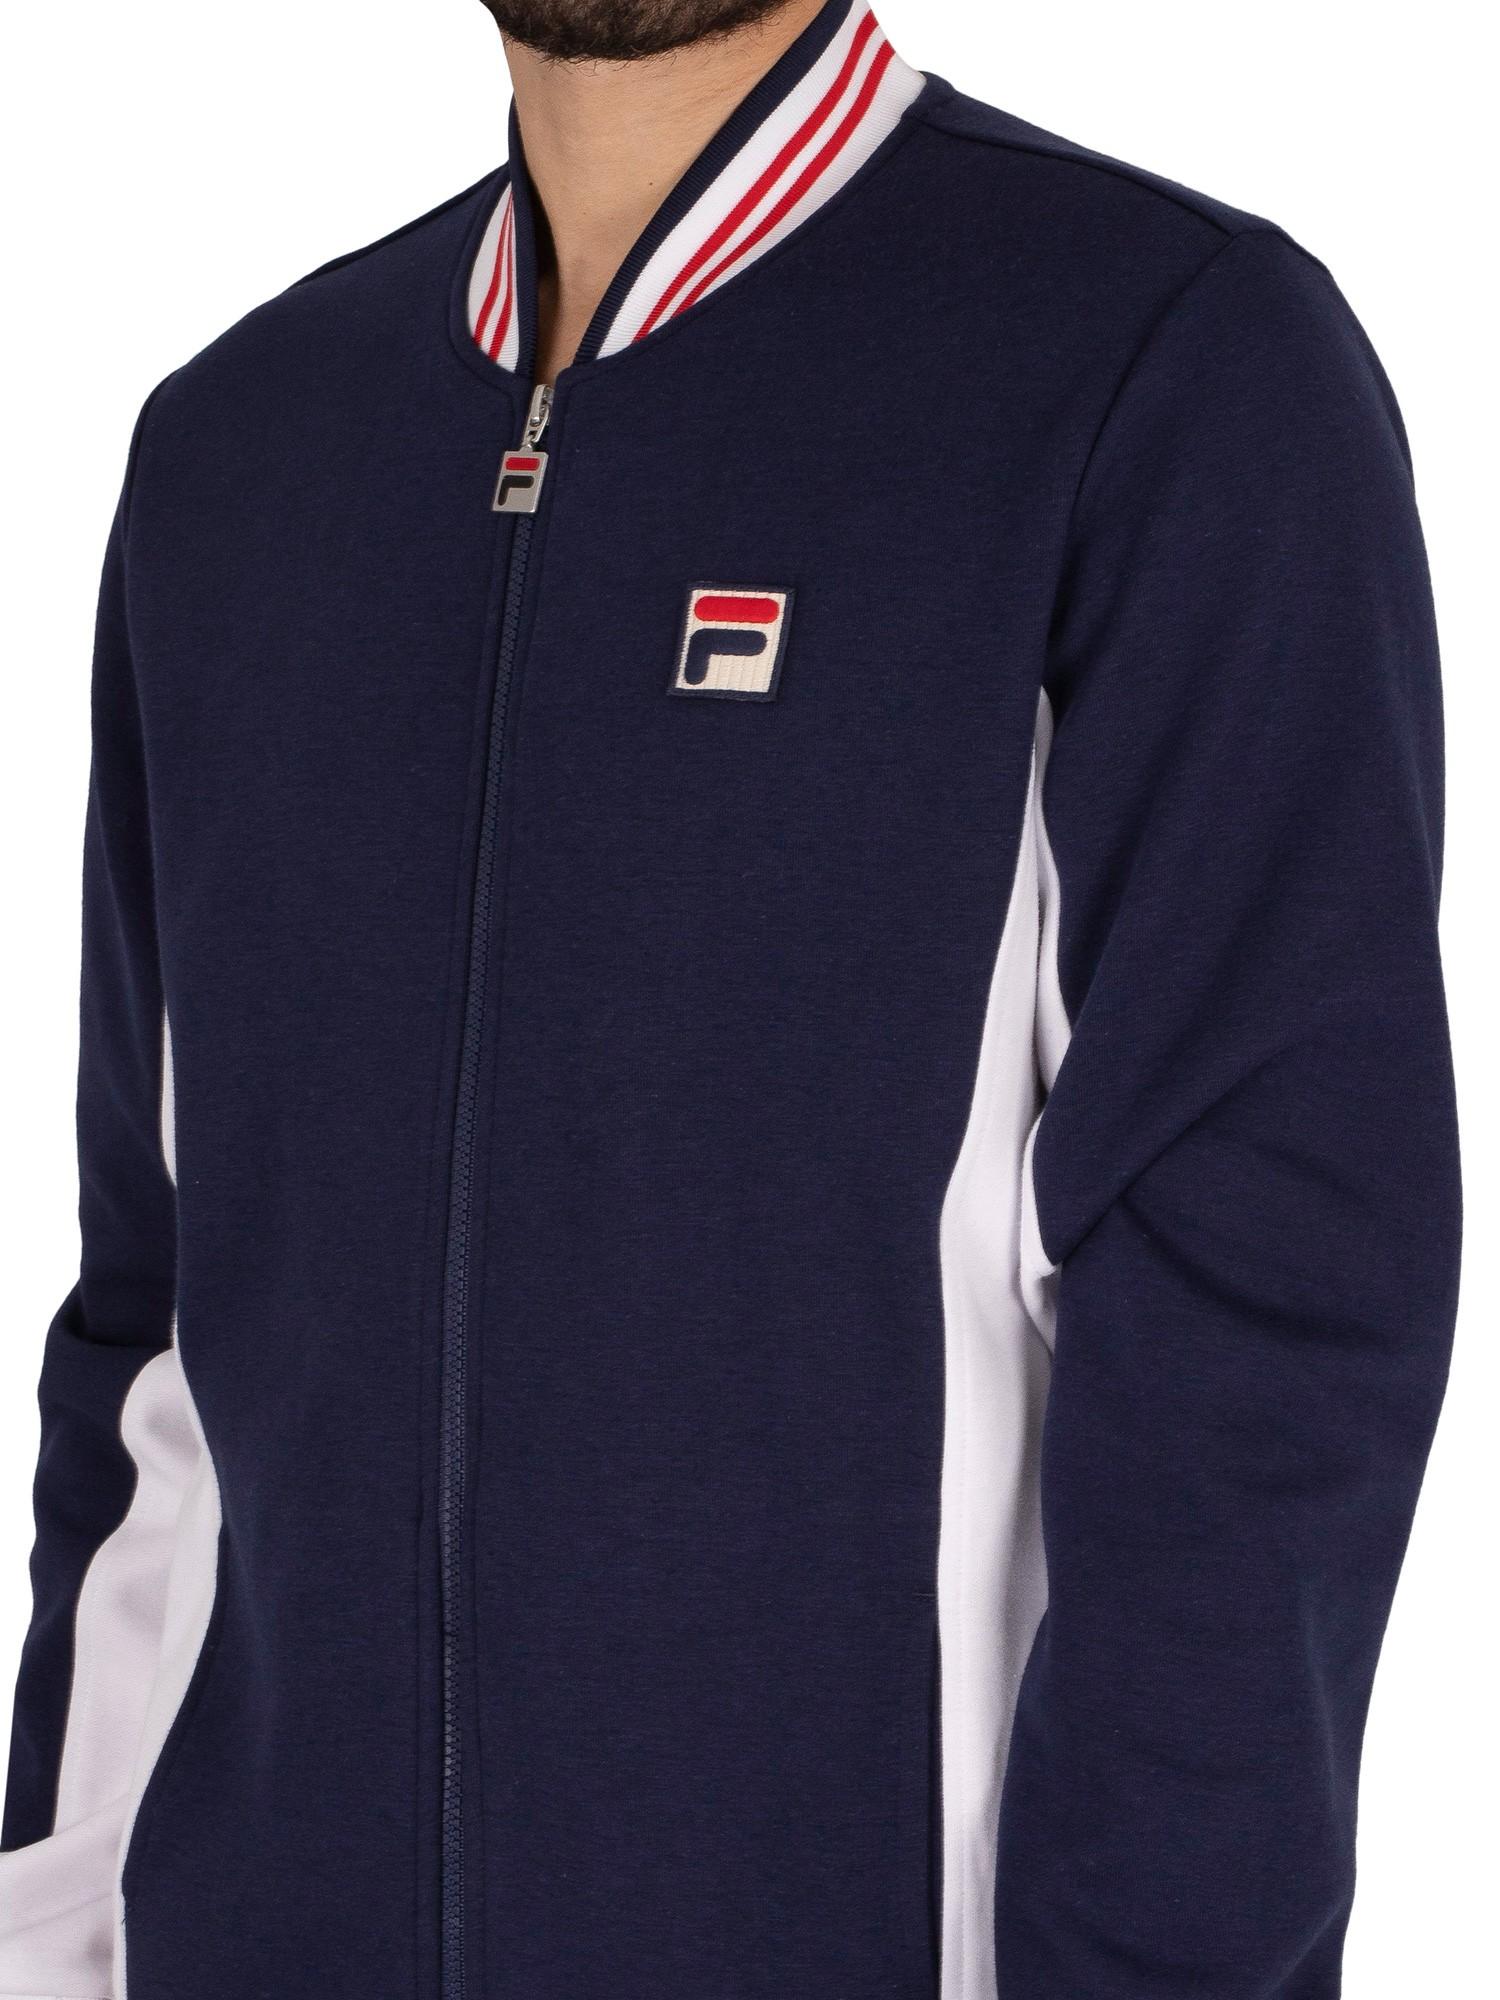 Fila Synthetic Settanta Zip Track Jacket in Navy (Blue) for Men - Lyst